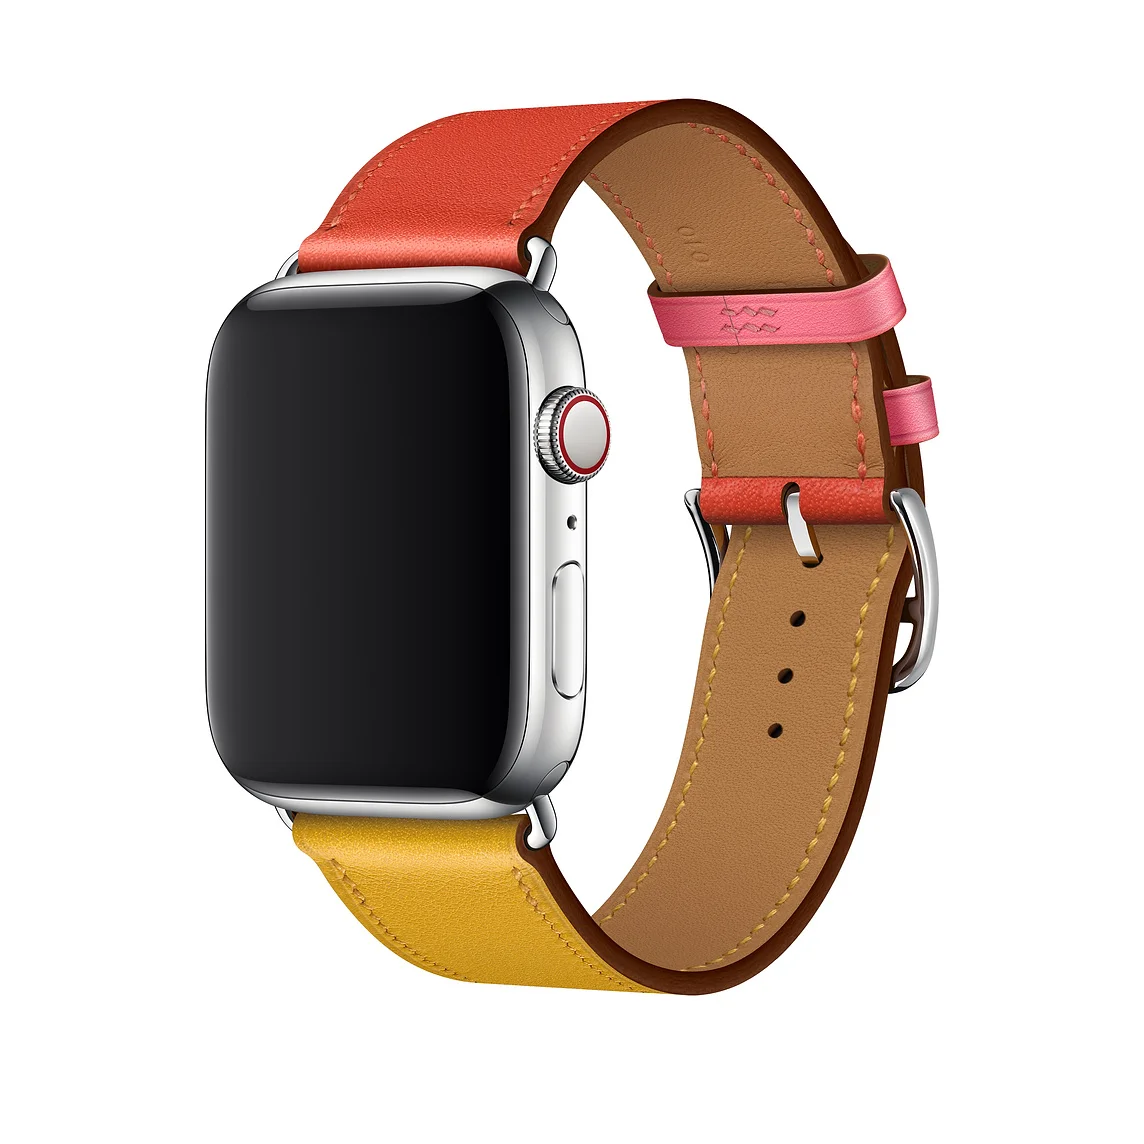 Řemínek iMore Single Tour Apple Watch Series 3/2/1 (42mm) - Bordó/Žlutý